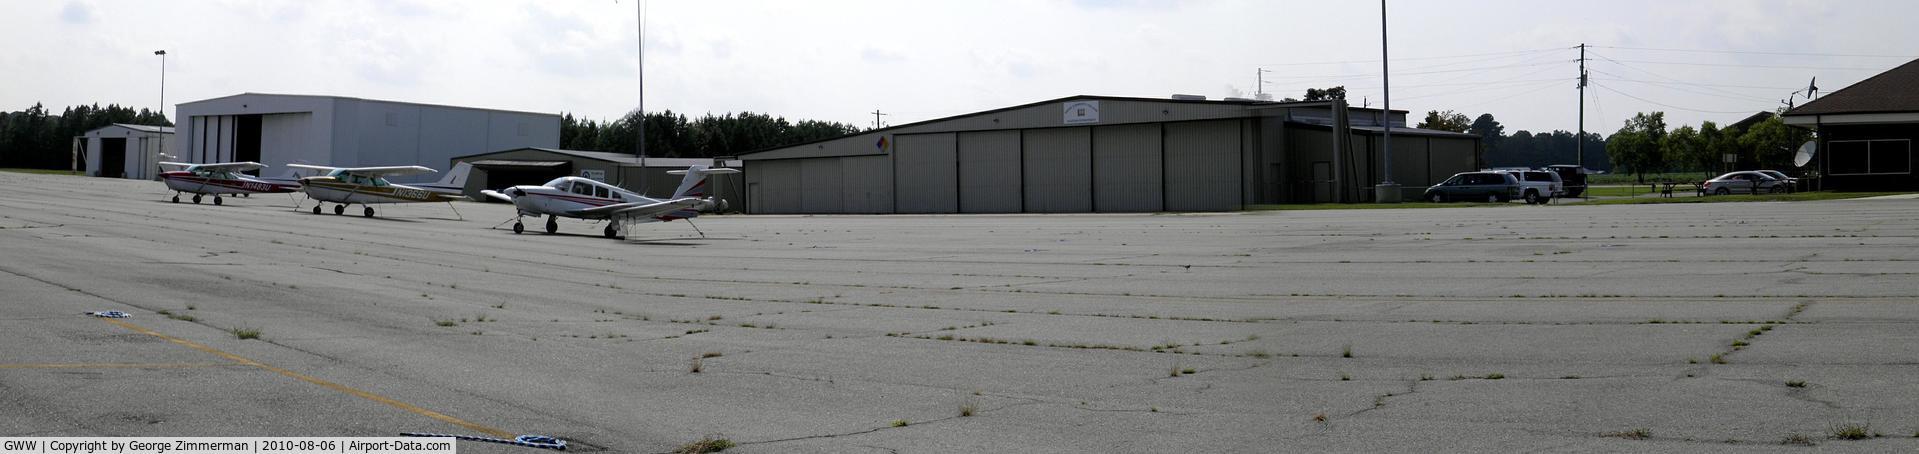 Wayne Executive Jetport Airport (GWW) - All hangers  south side of Goldsboro-Wayne Terminal